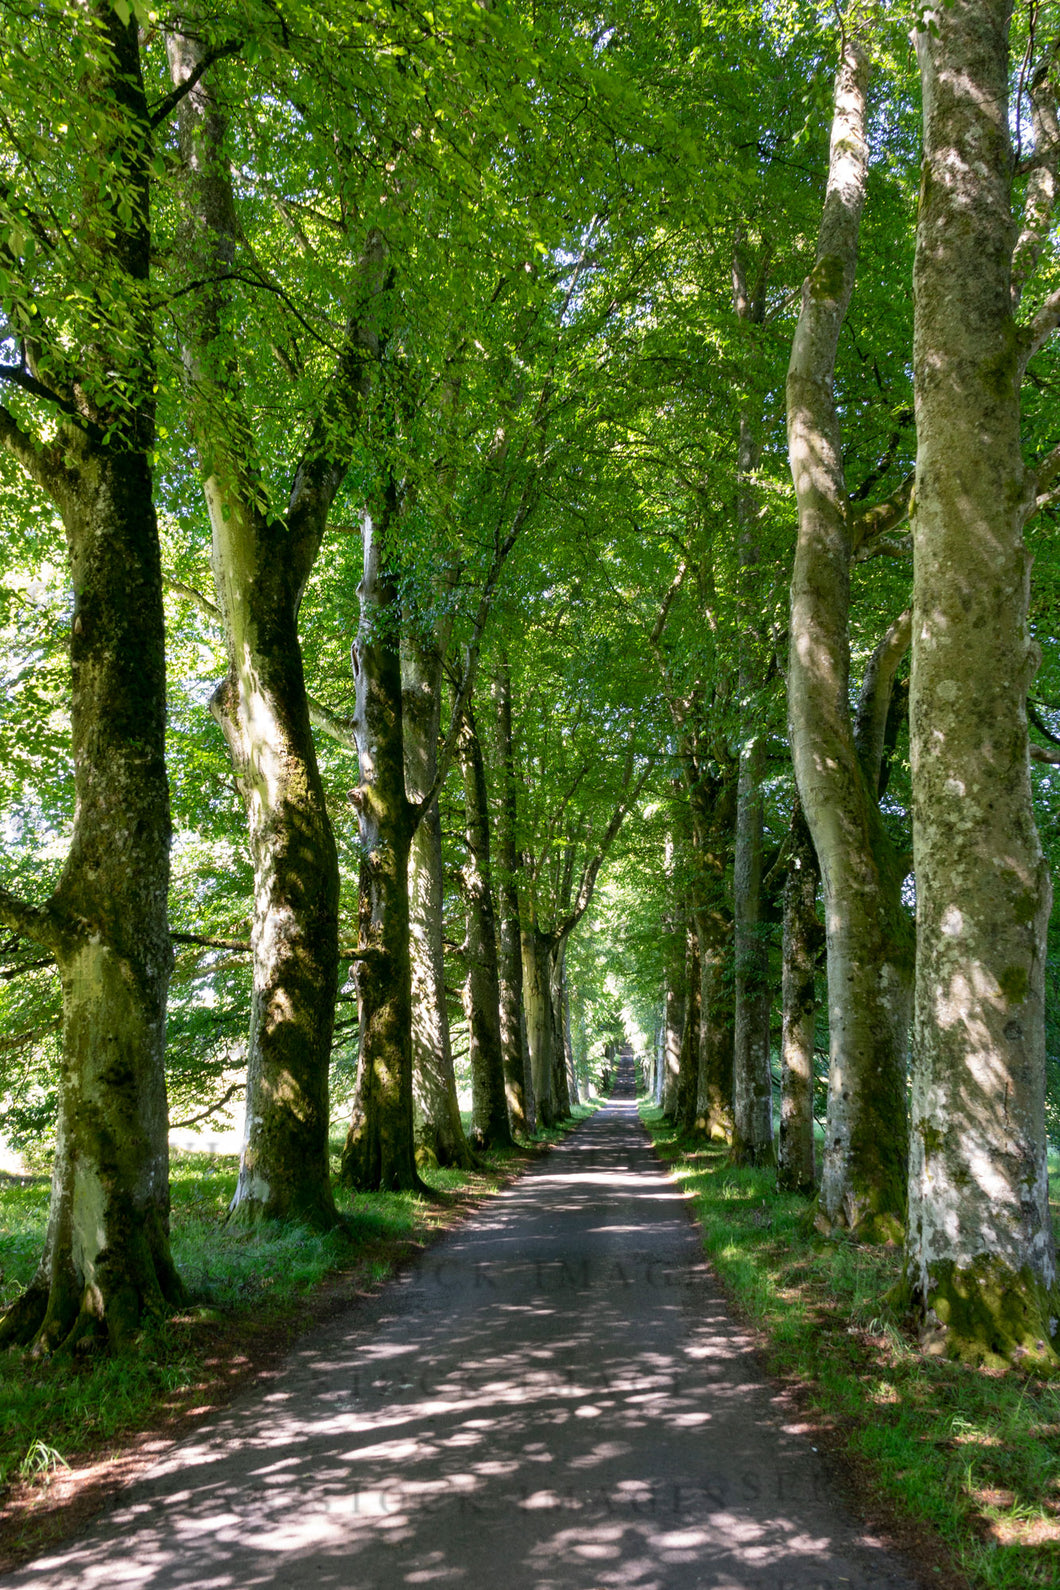 Landscape - Tree lined driveway, Scotland (Nick 1826)